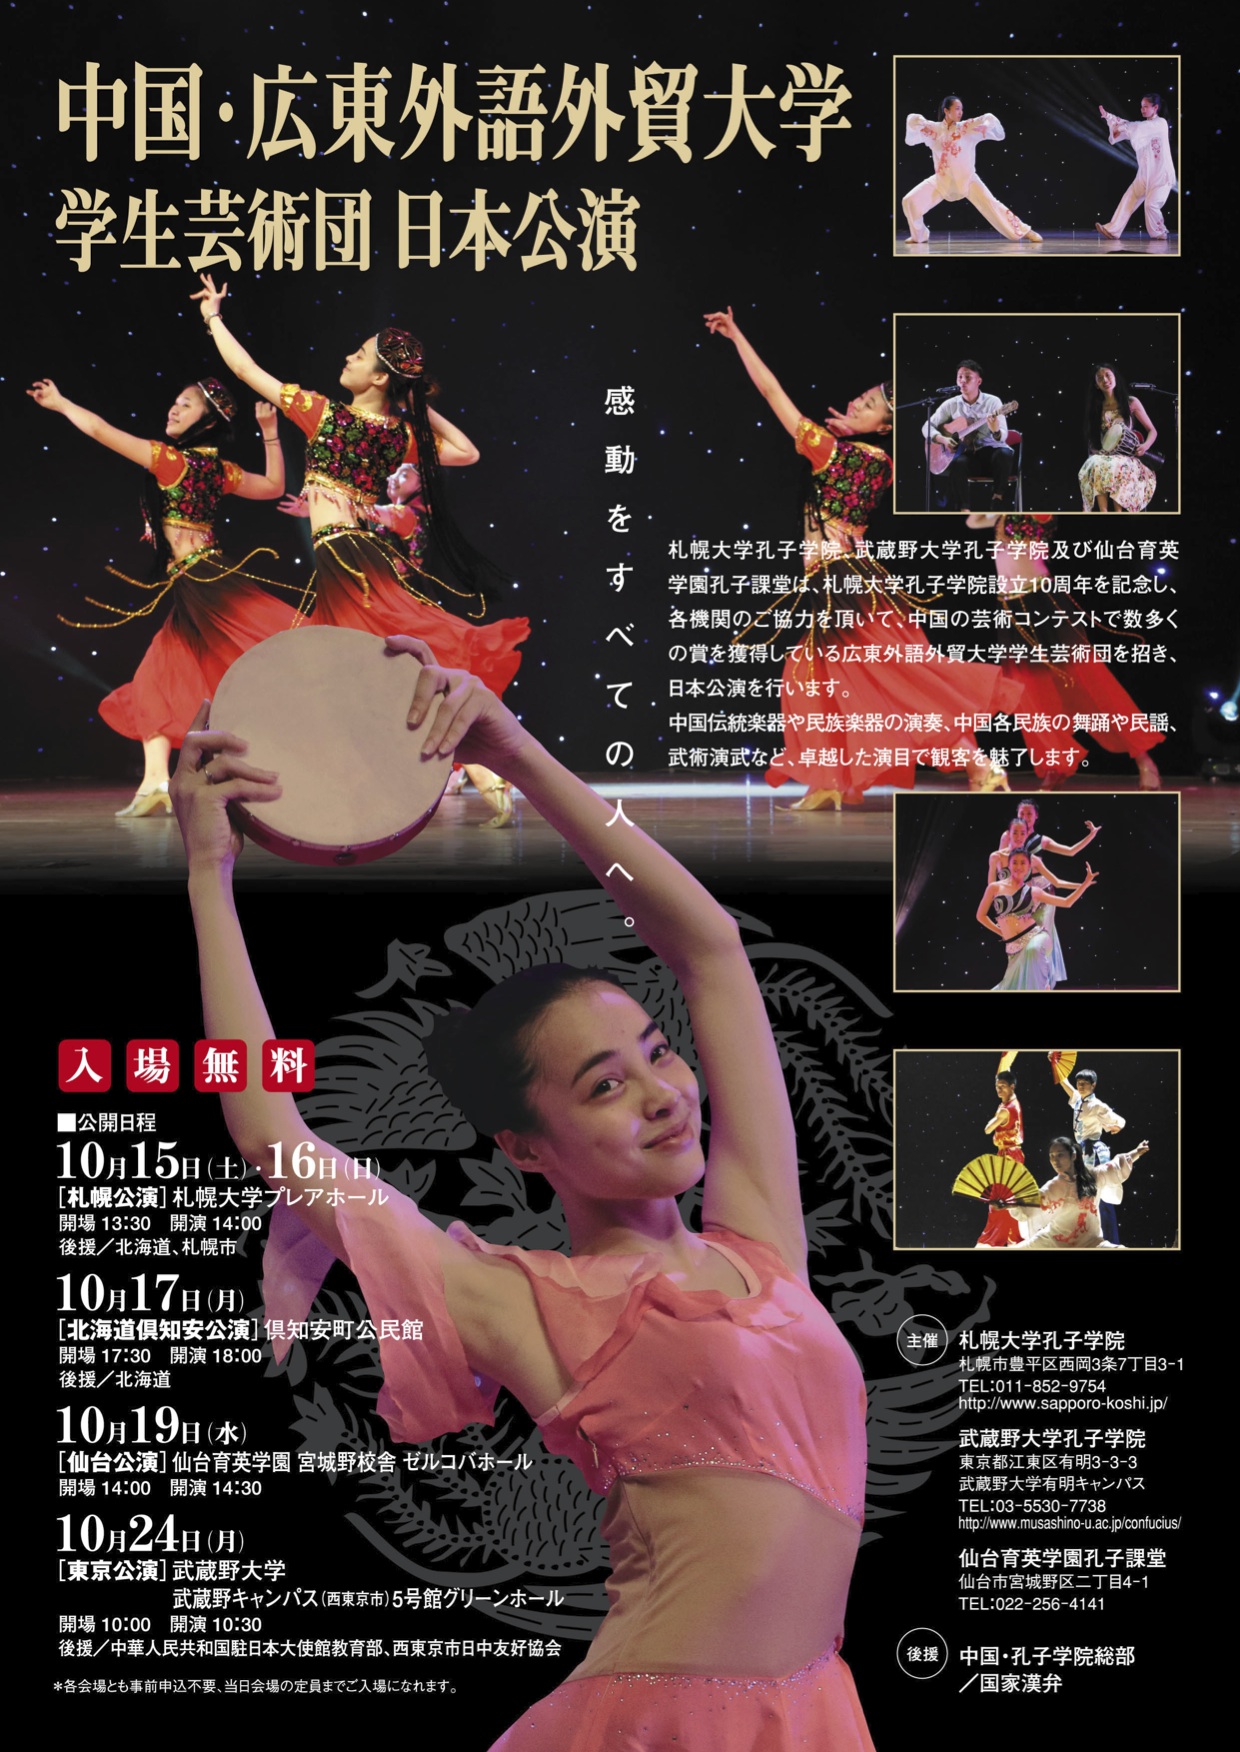 札幌大学孔子学院が10月に学院設立10周年記念公演を開催 -- 中国・広東外語外貿大学の学生芸術団が日本公演